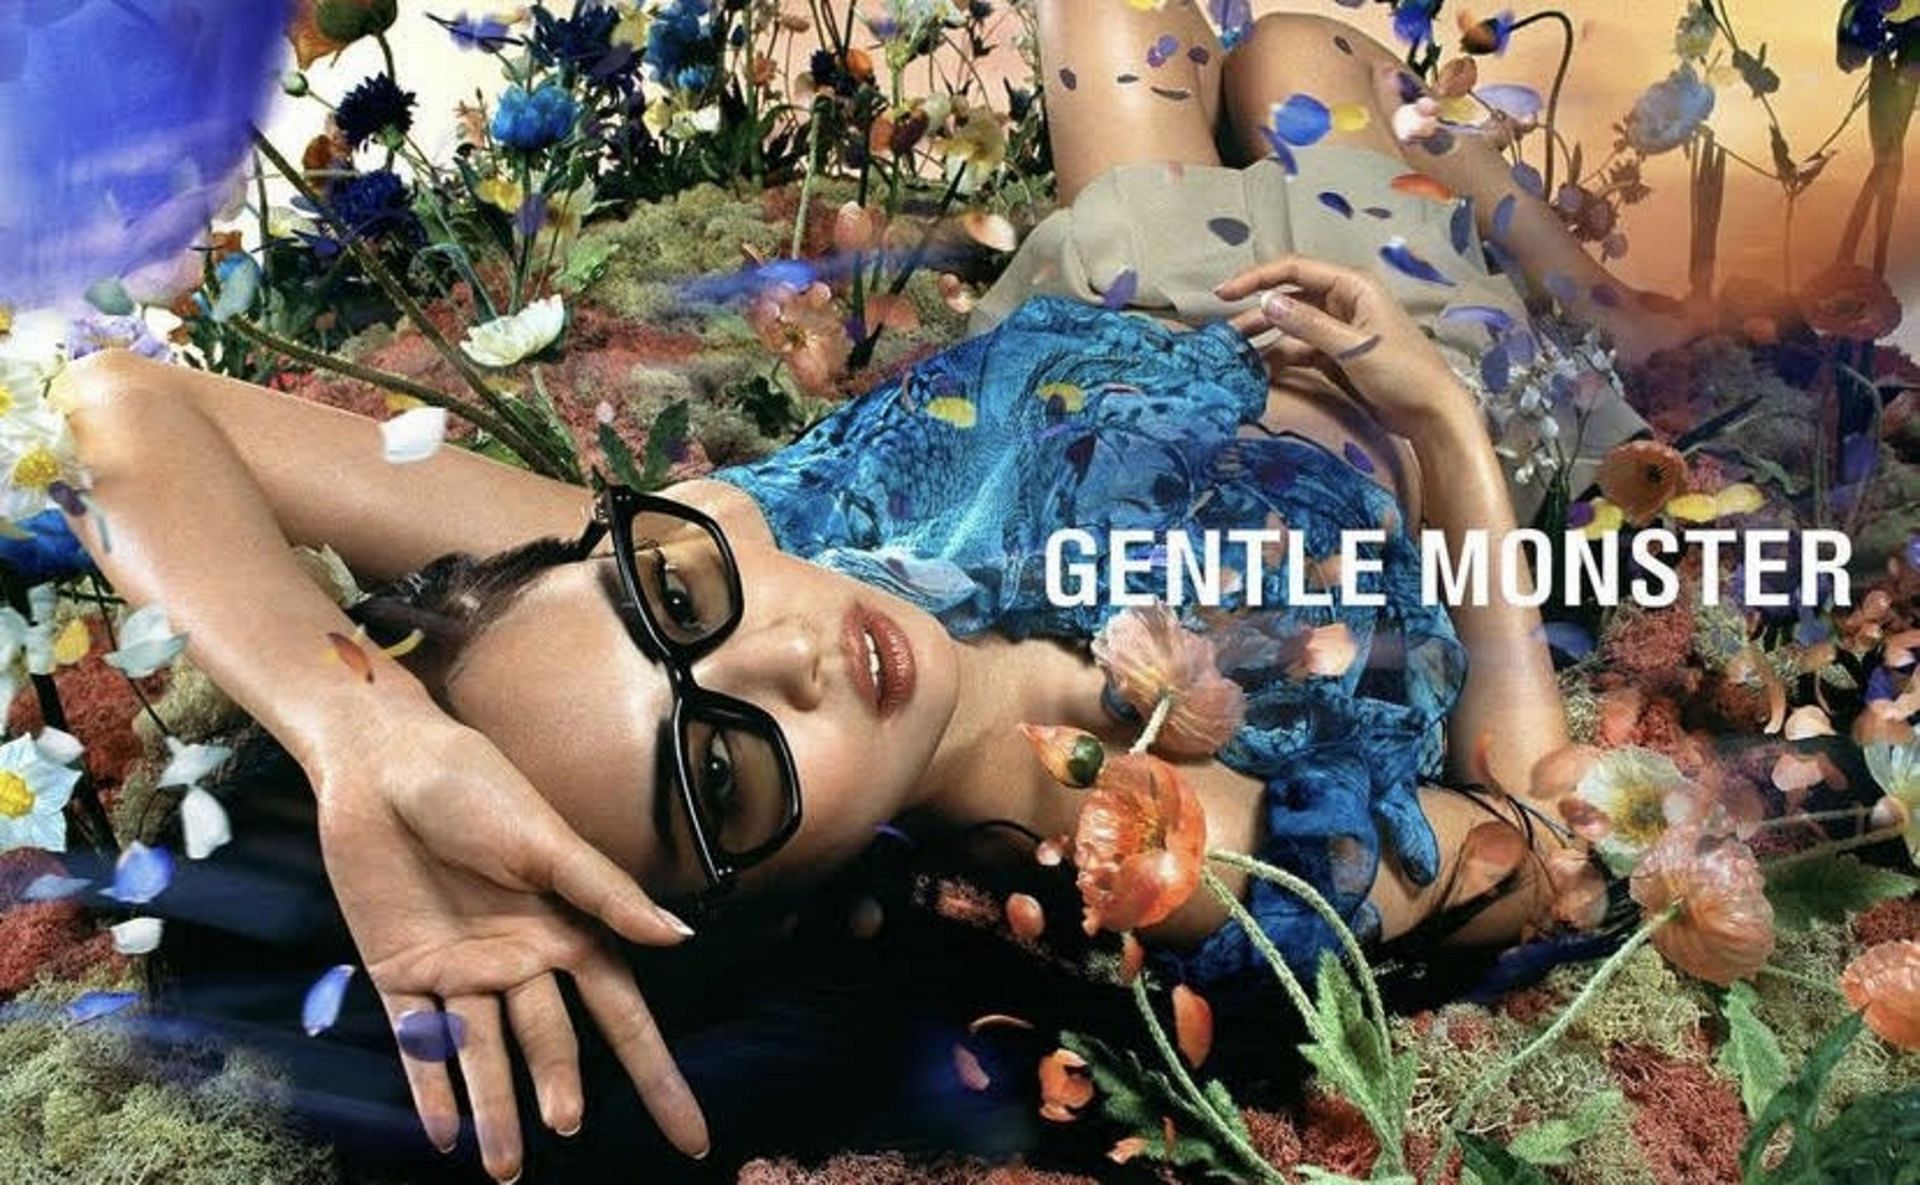 Gentle Monster drops pictures for its latest collection (Image via Instagram/@gentlemonster)